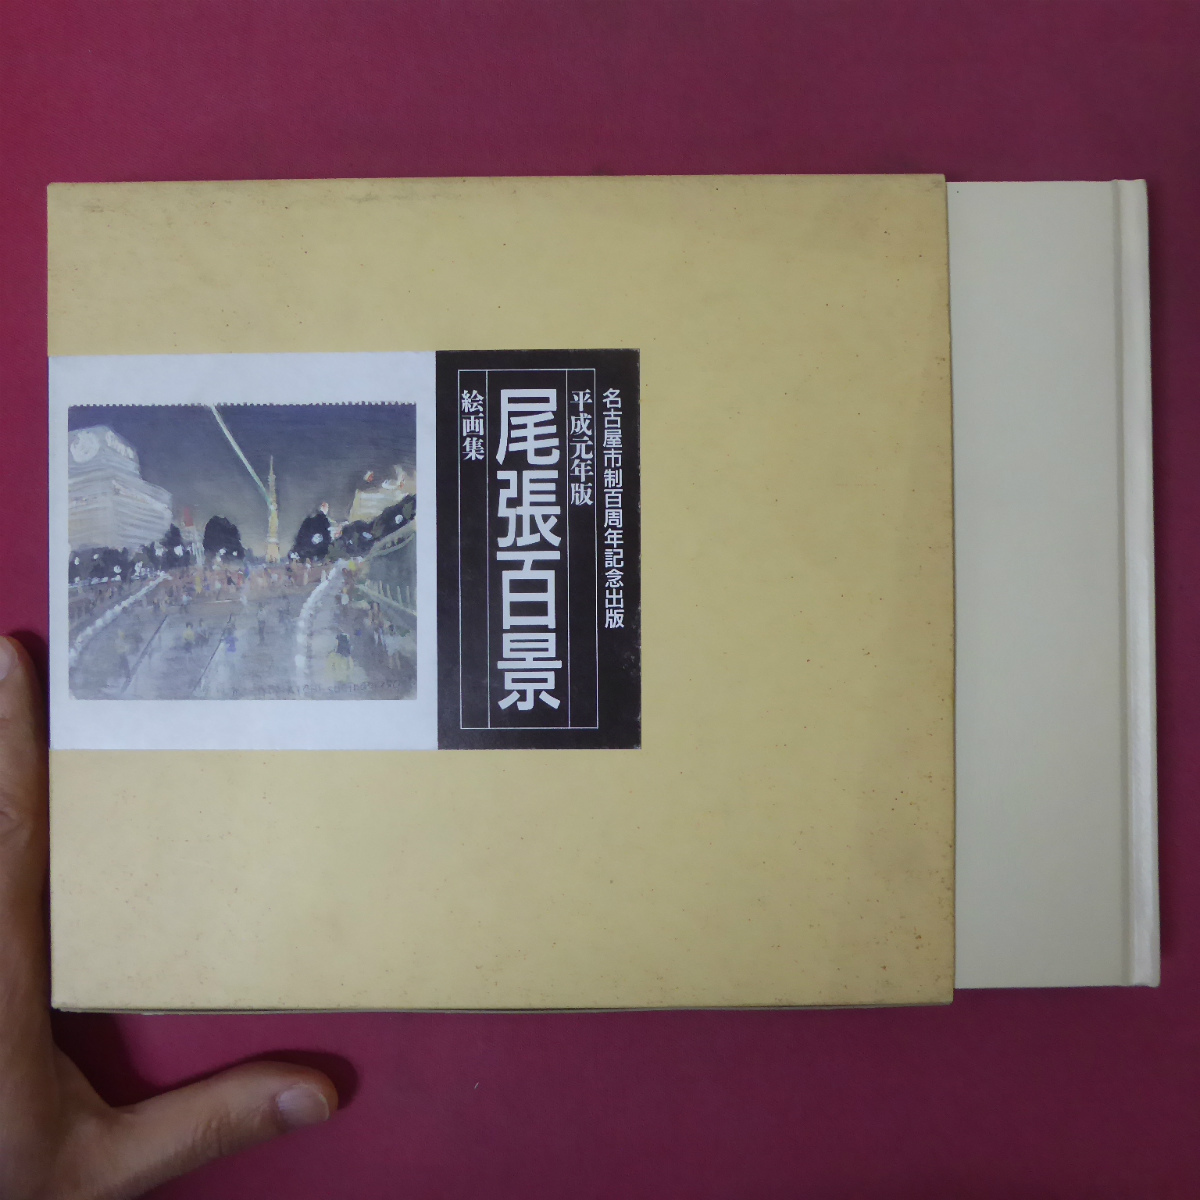 2 Kataloge [Ausgabe 1989 Owari 100 Views Painting Collection/1989 World Design Expo Nagoya Castle Venue], Malerei, Kunstbuch, Sammlung, Katalog